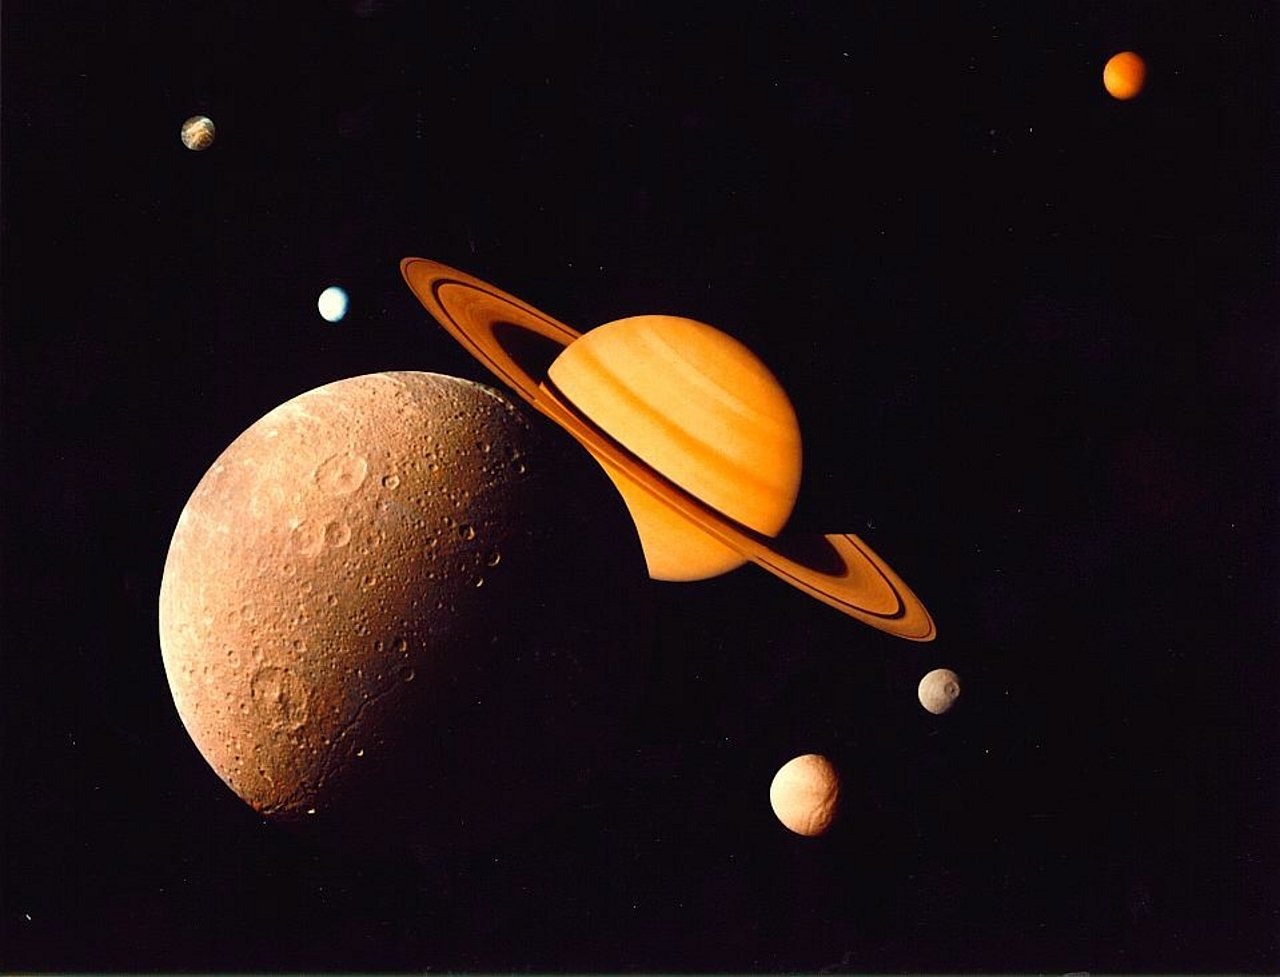 Saturn, Planeta, Monde, Dionas, Tethys, Mimas, Enceladus, Rhea, Titanas, Erdvė